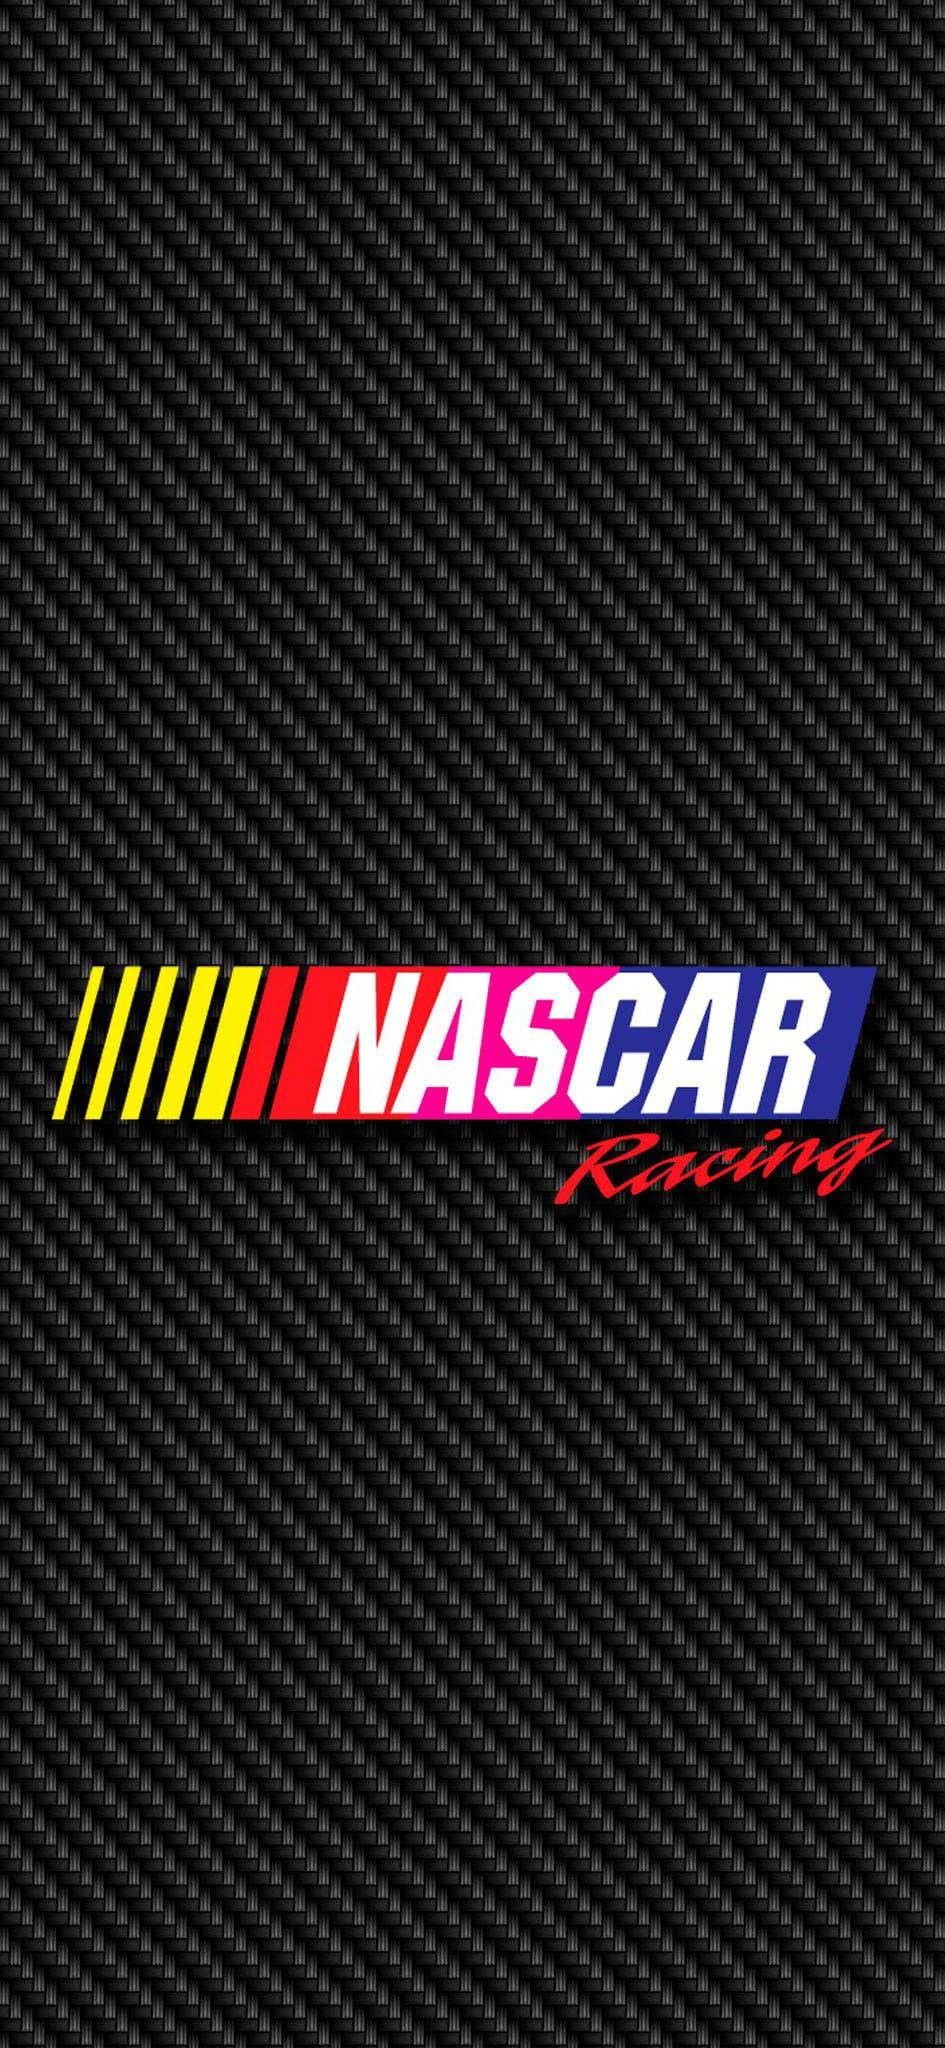 NASCAR wallpaper from Zedge. Nascar, Funny hunting pics, Sports car racing